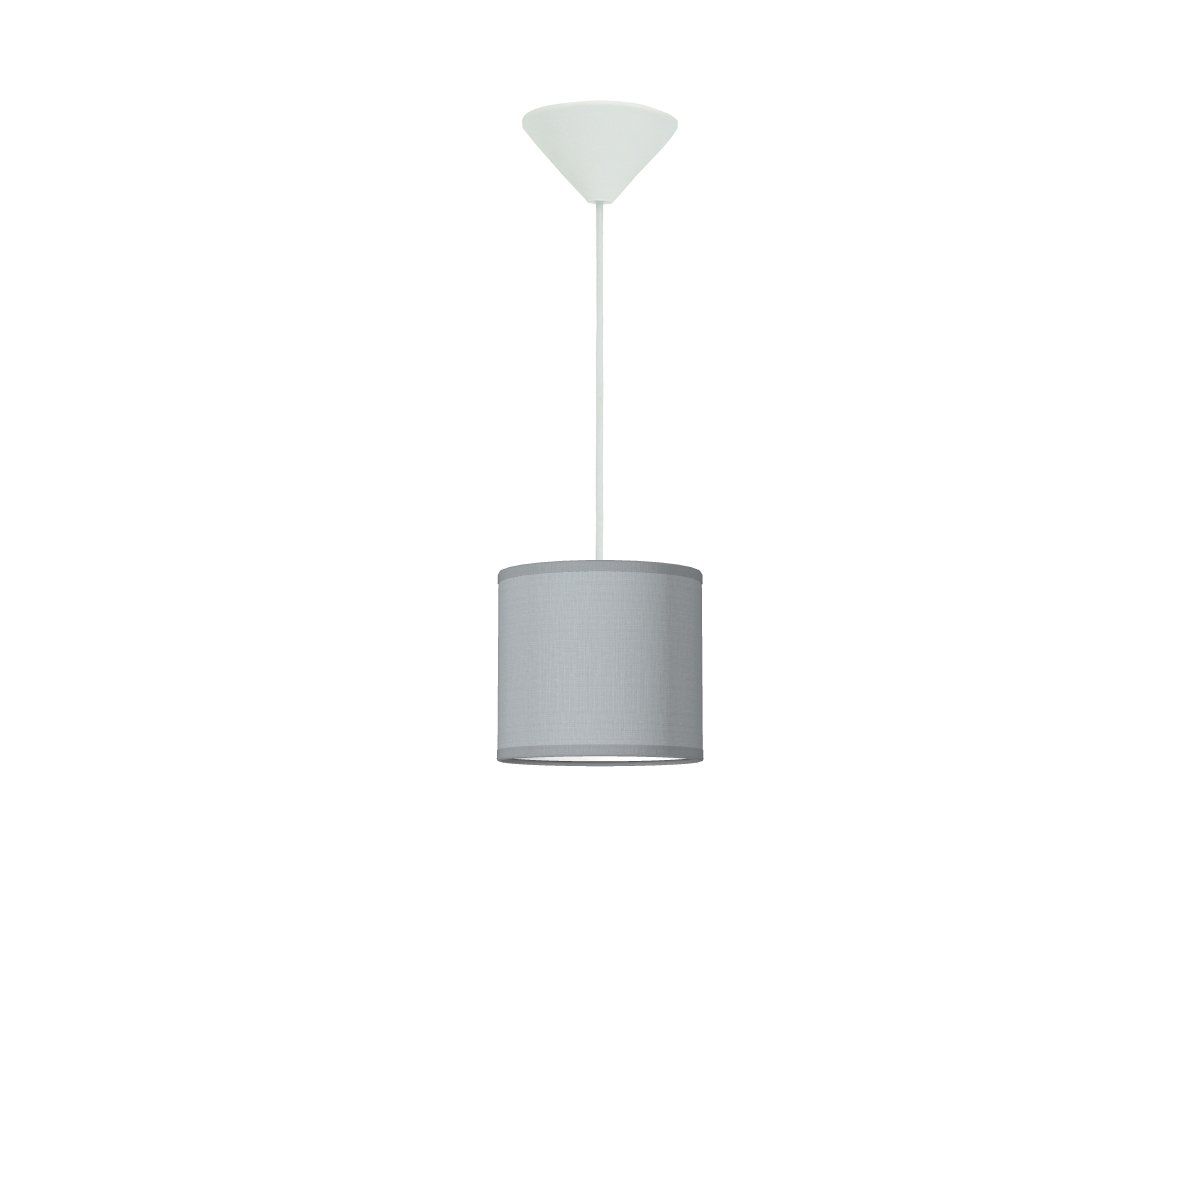 Light depot - hanglamp Bling Ø 16 cm - lichtgrijs - Outlet